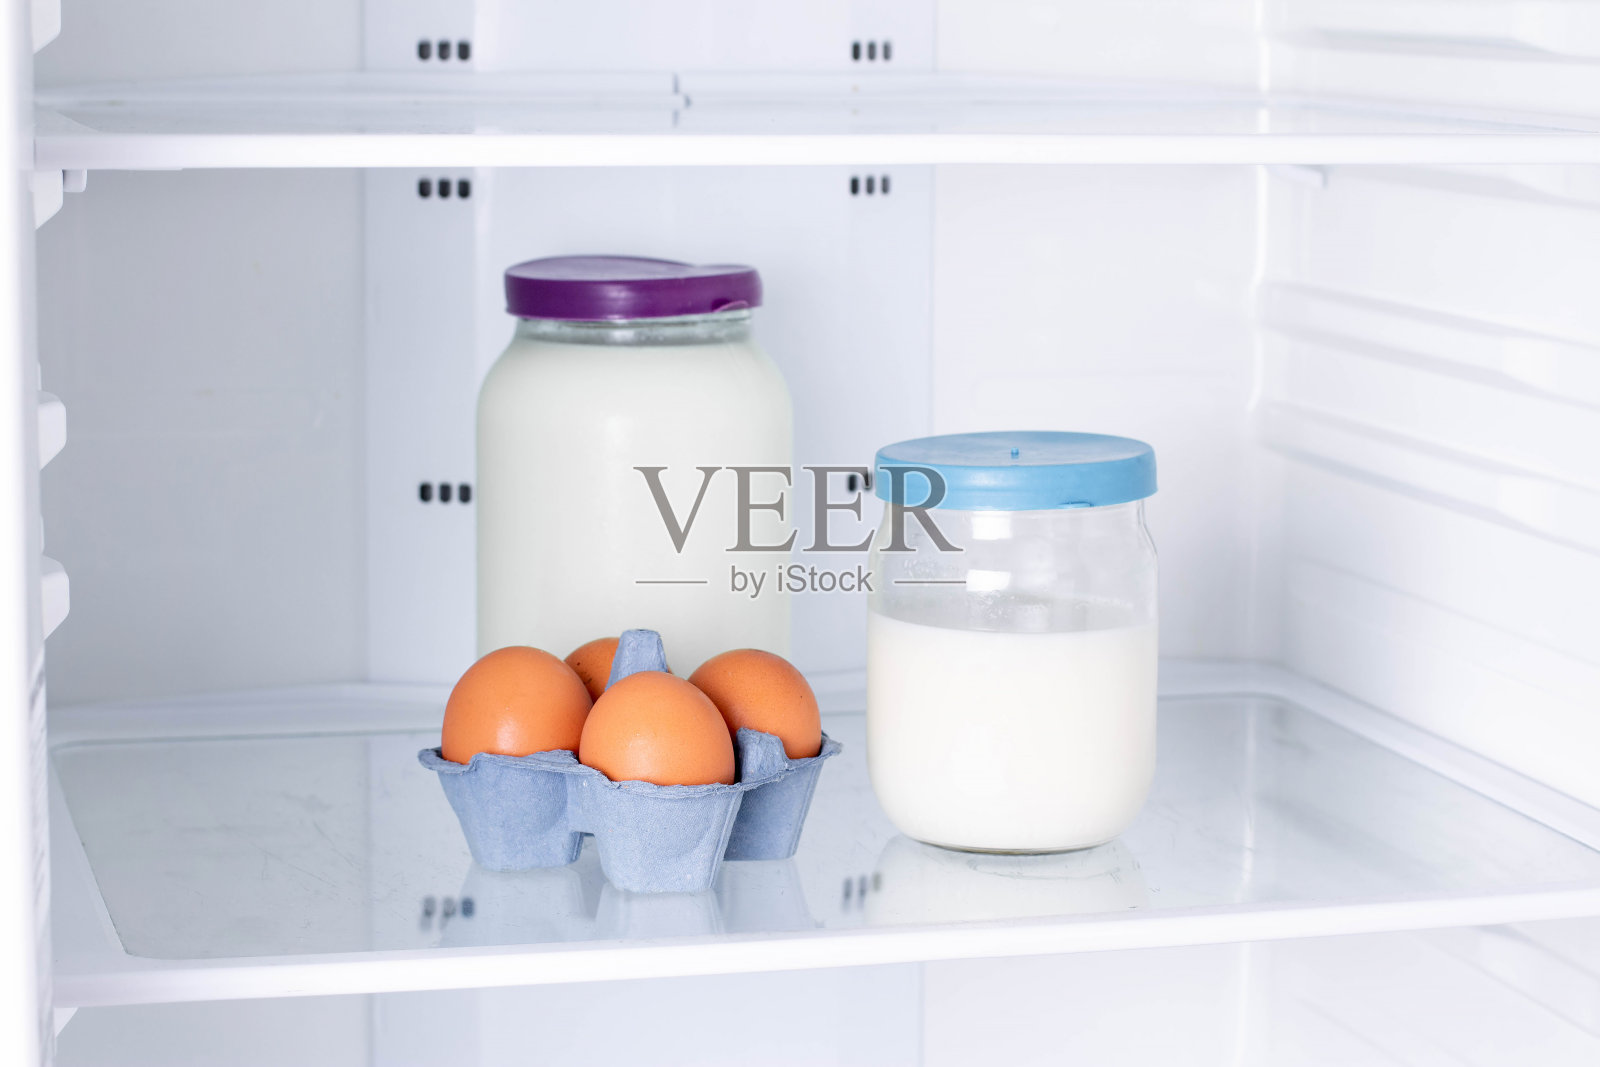 Totally 厨房冰箱鸡蛋架 - 不含 BPA 的塑料鸡蛋抽屉可容纳 40 个鸡蛋 - 冰箱收纳盒用于鸡蛋 : 亚马逊中国: 大家电